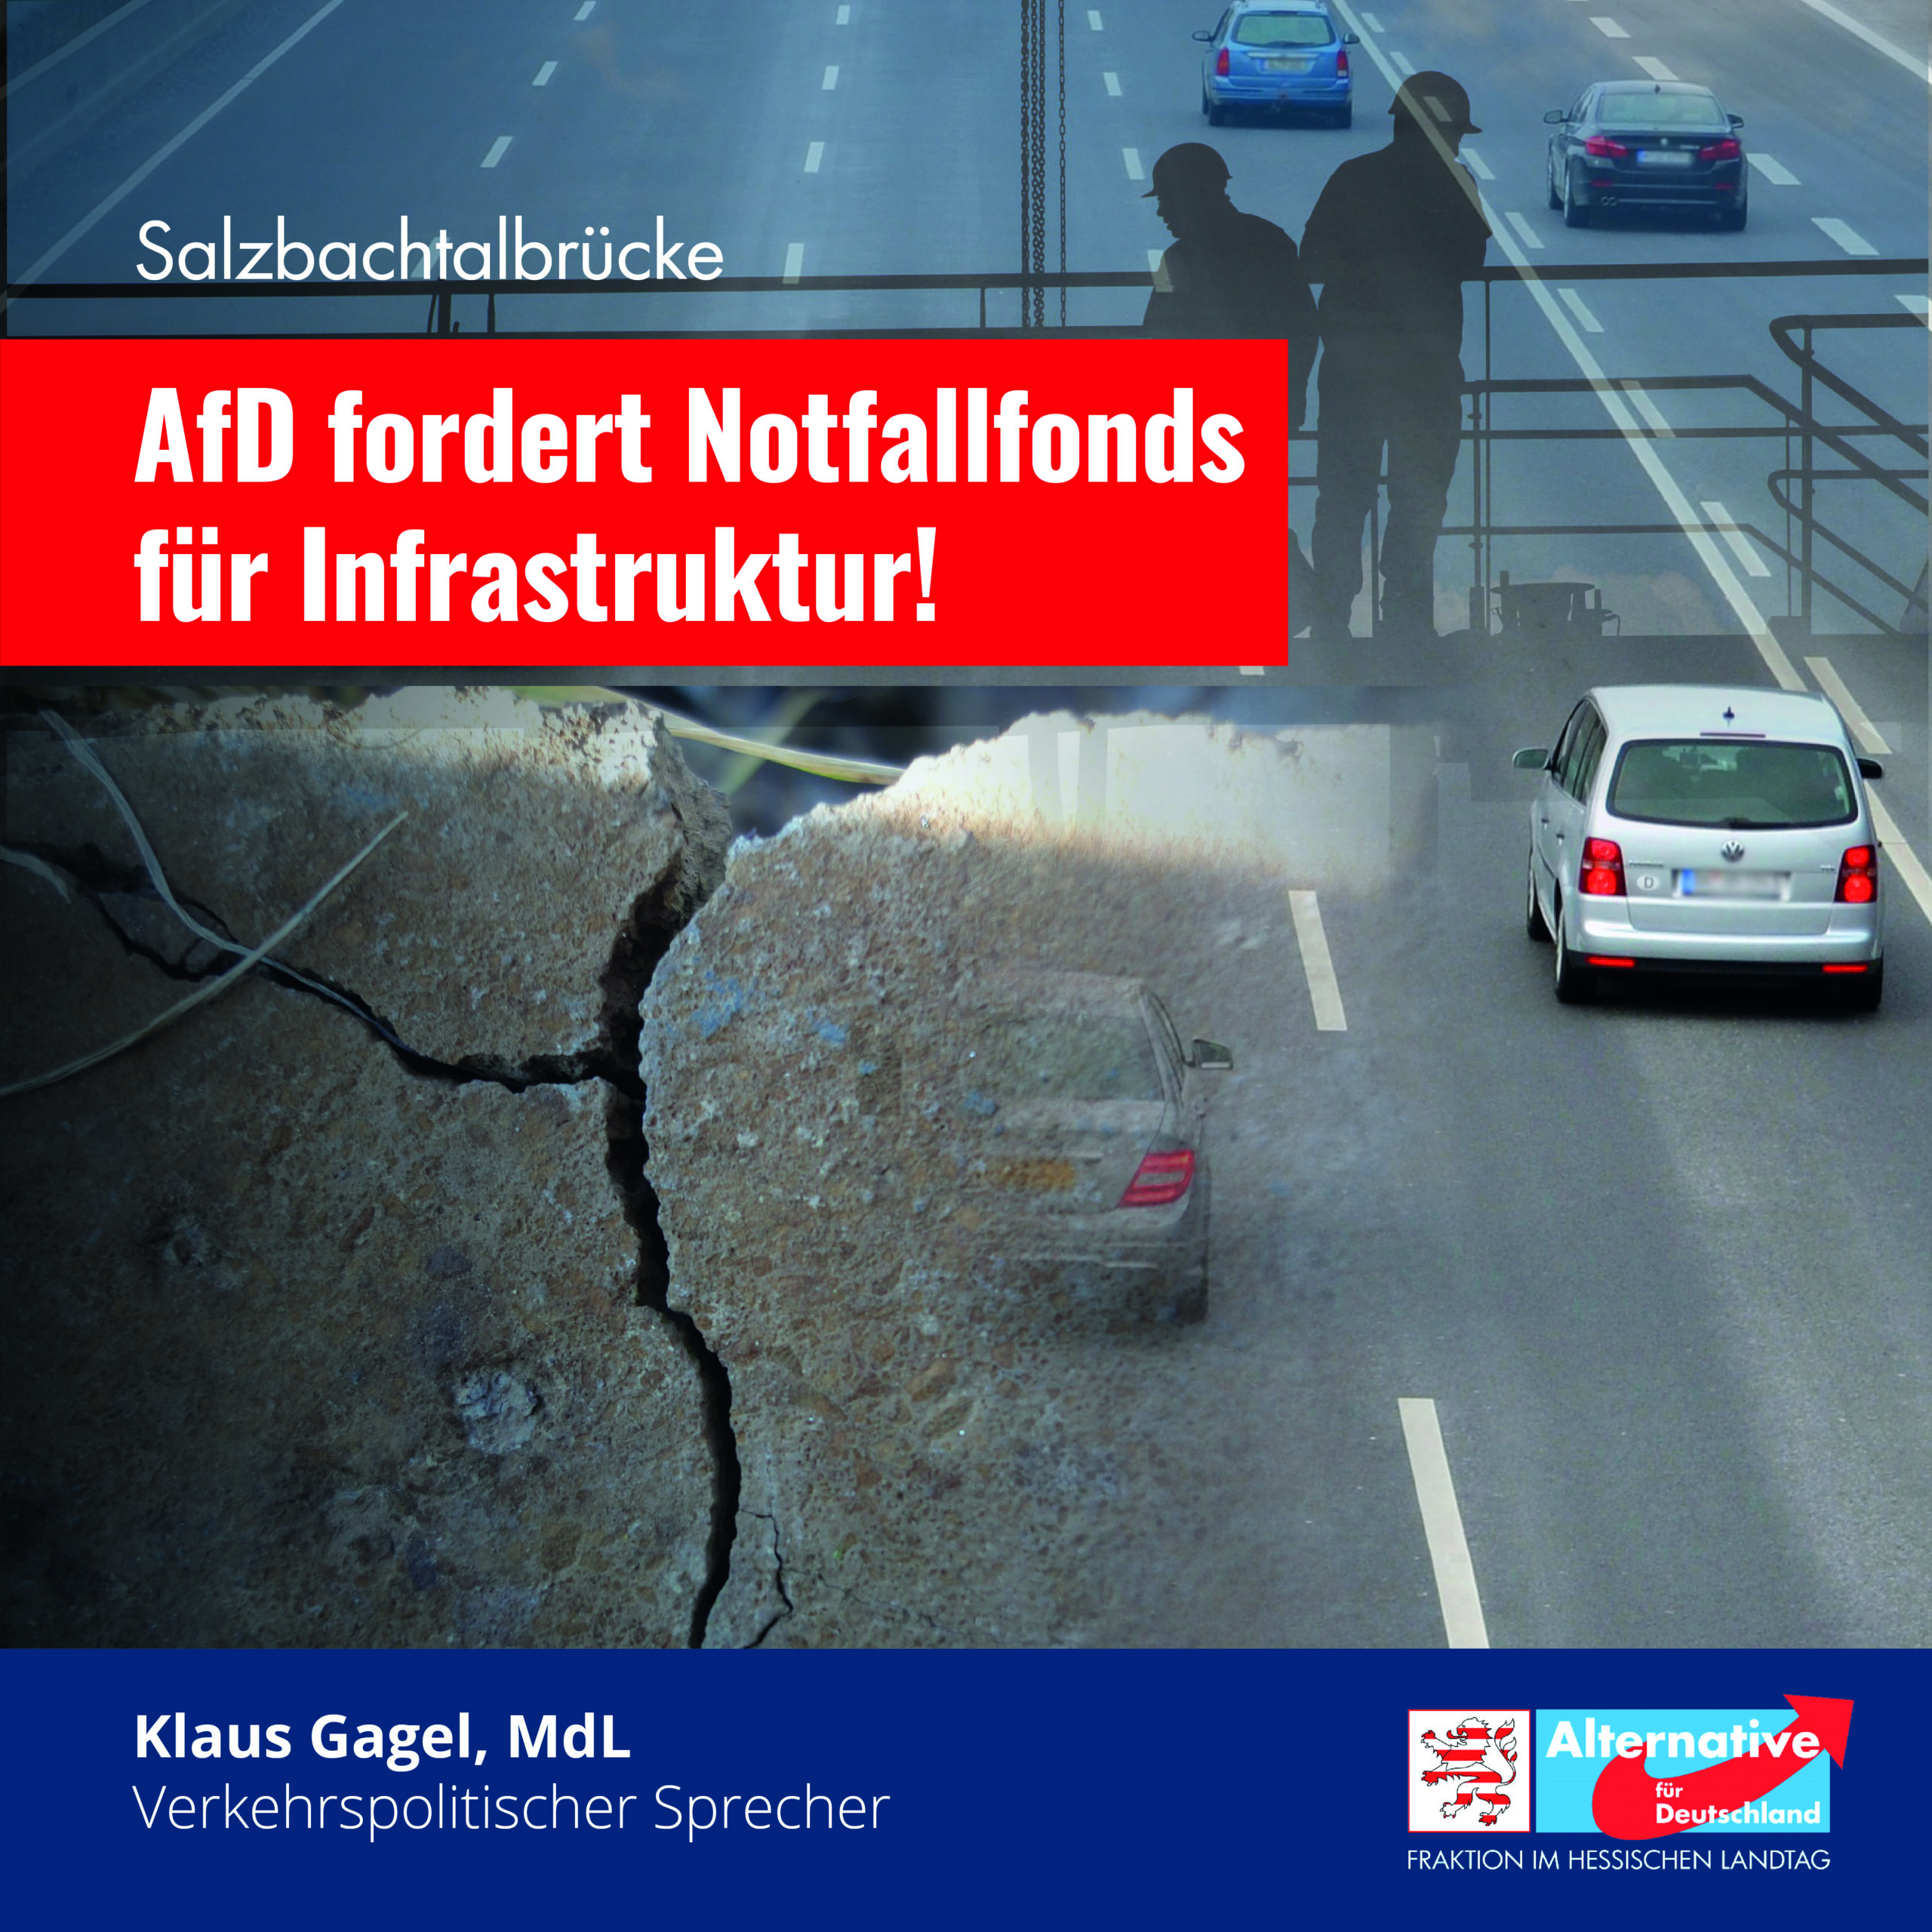 You are currently viewing Salzbachtalbrücke: AfD fordert Notfallfonds für Infrastruktur